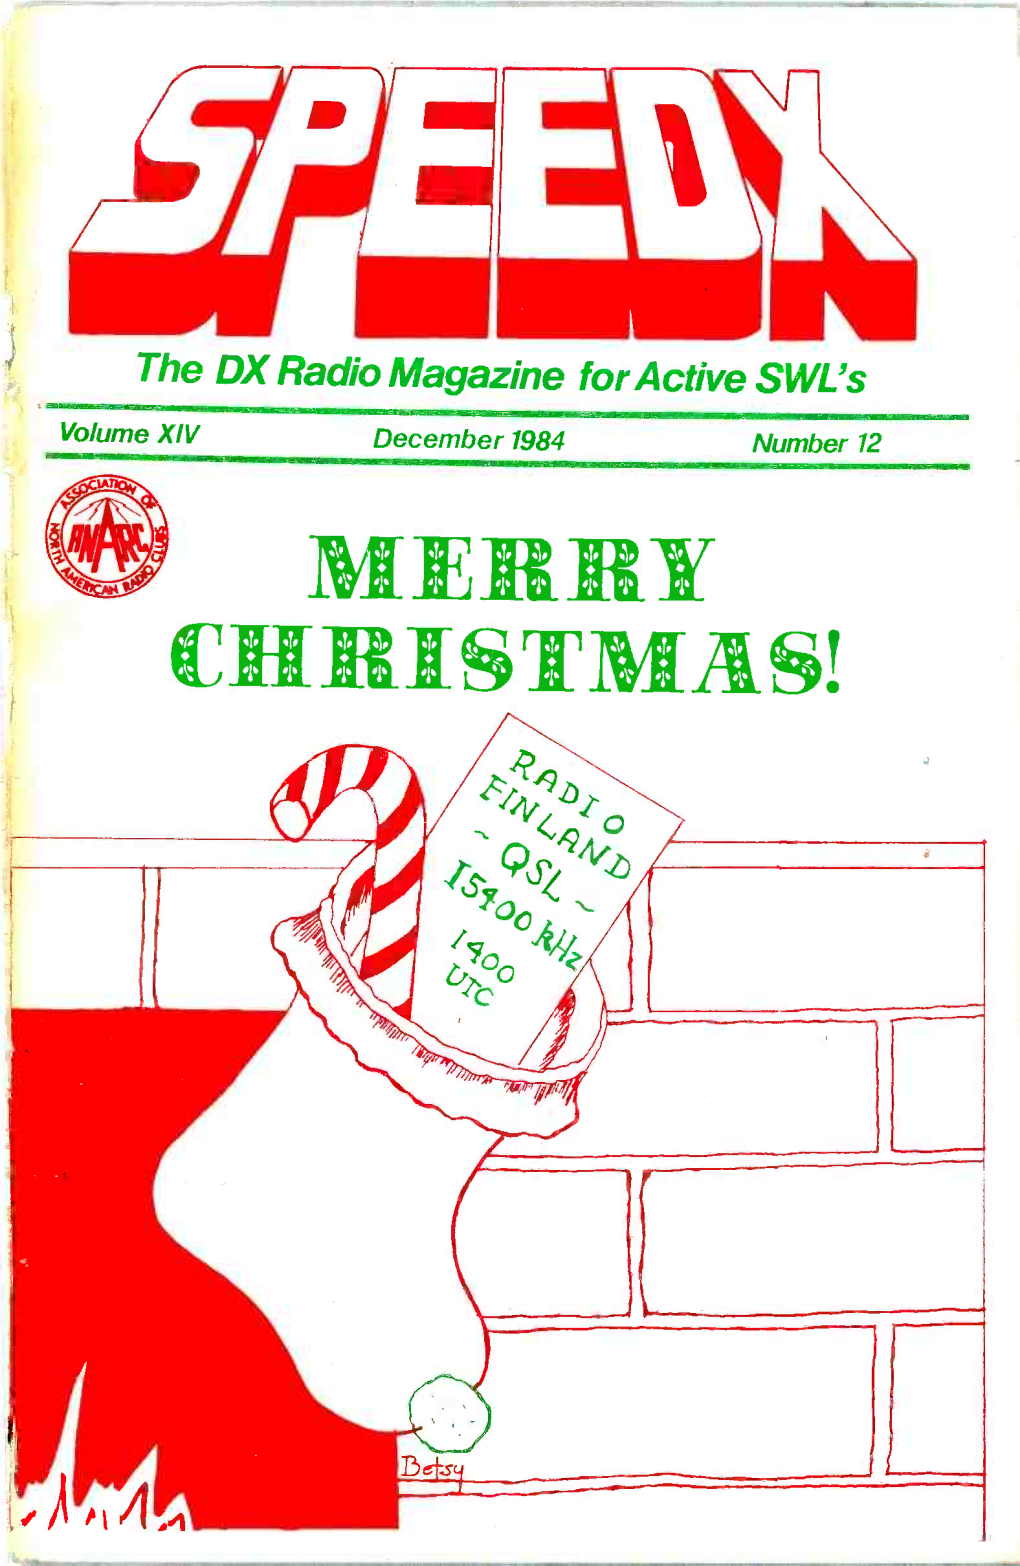 The DX Radio Magazine for Active SWL's Volume XIV December 1984 Number 12 I .Àg111111111111111111